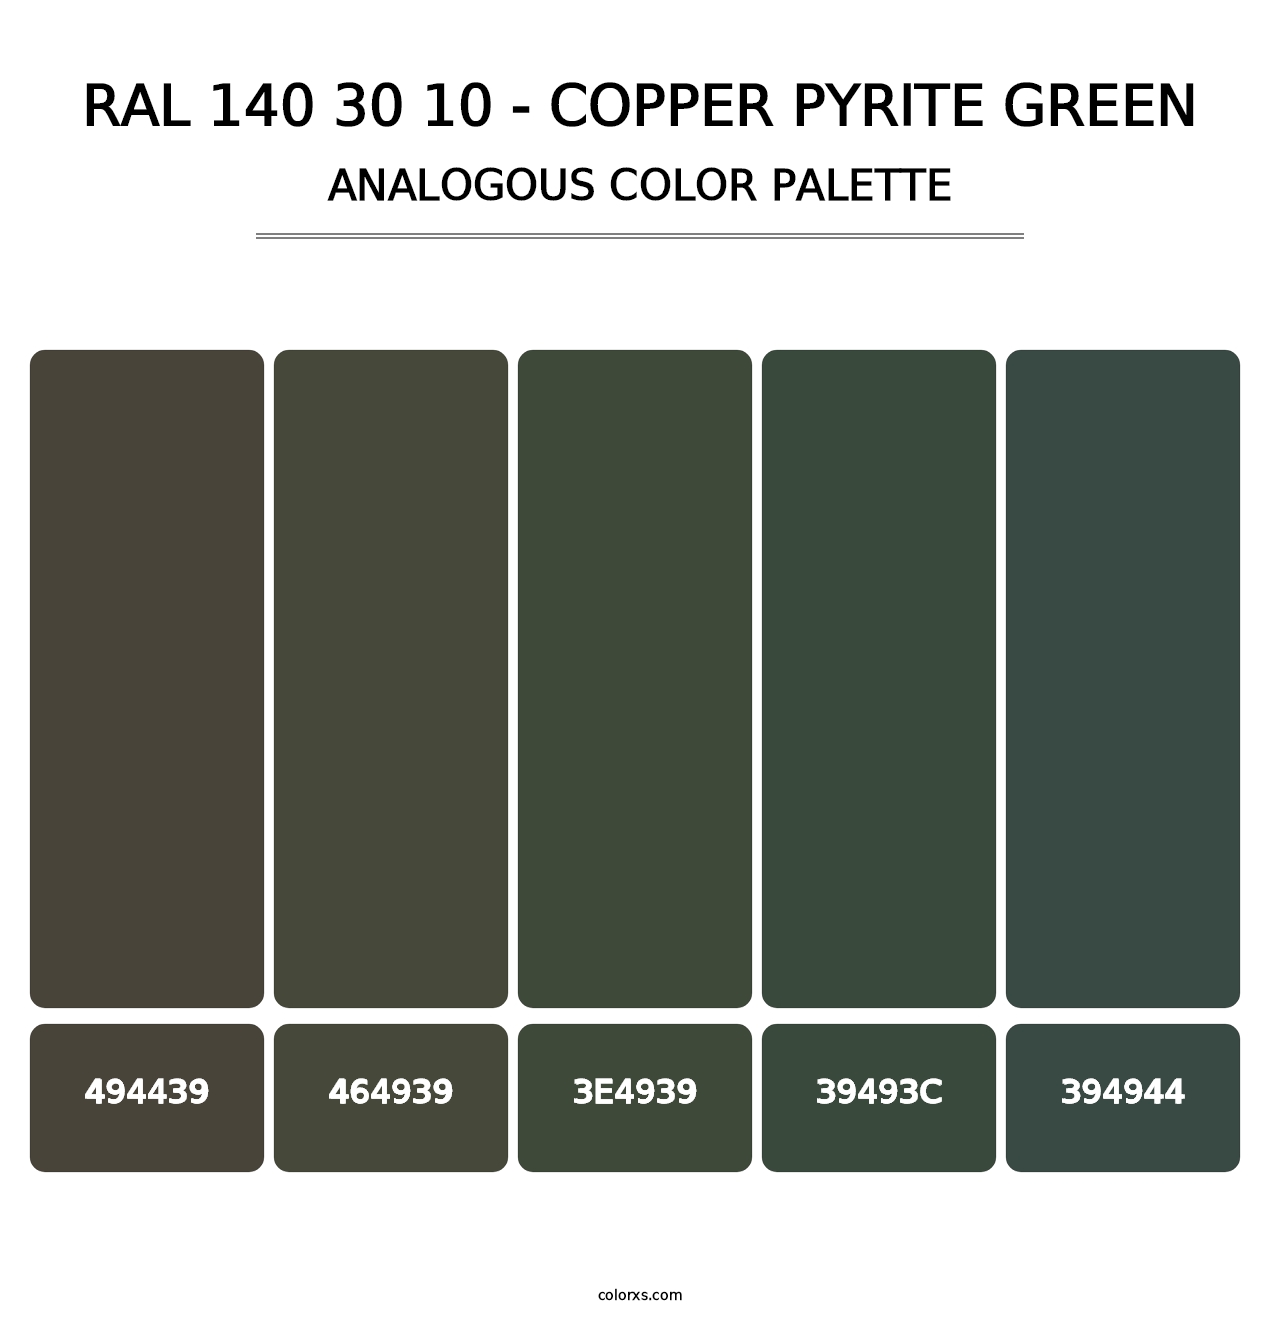 RAL 140 30 10 - Copper Pyrite Green - Analogous Color Palette